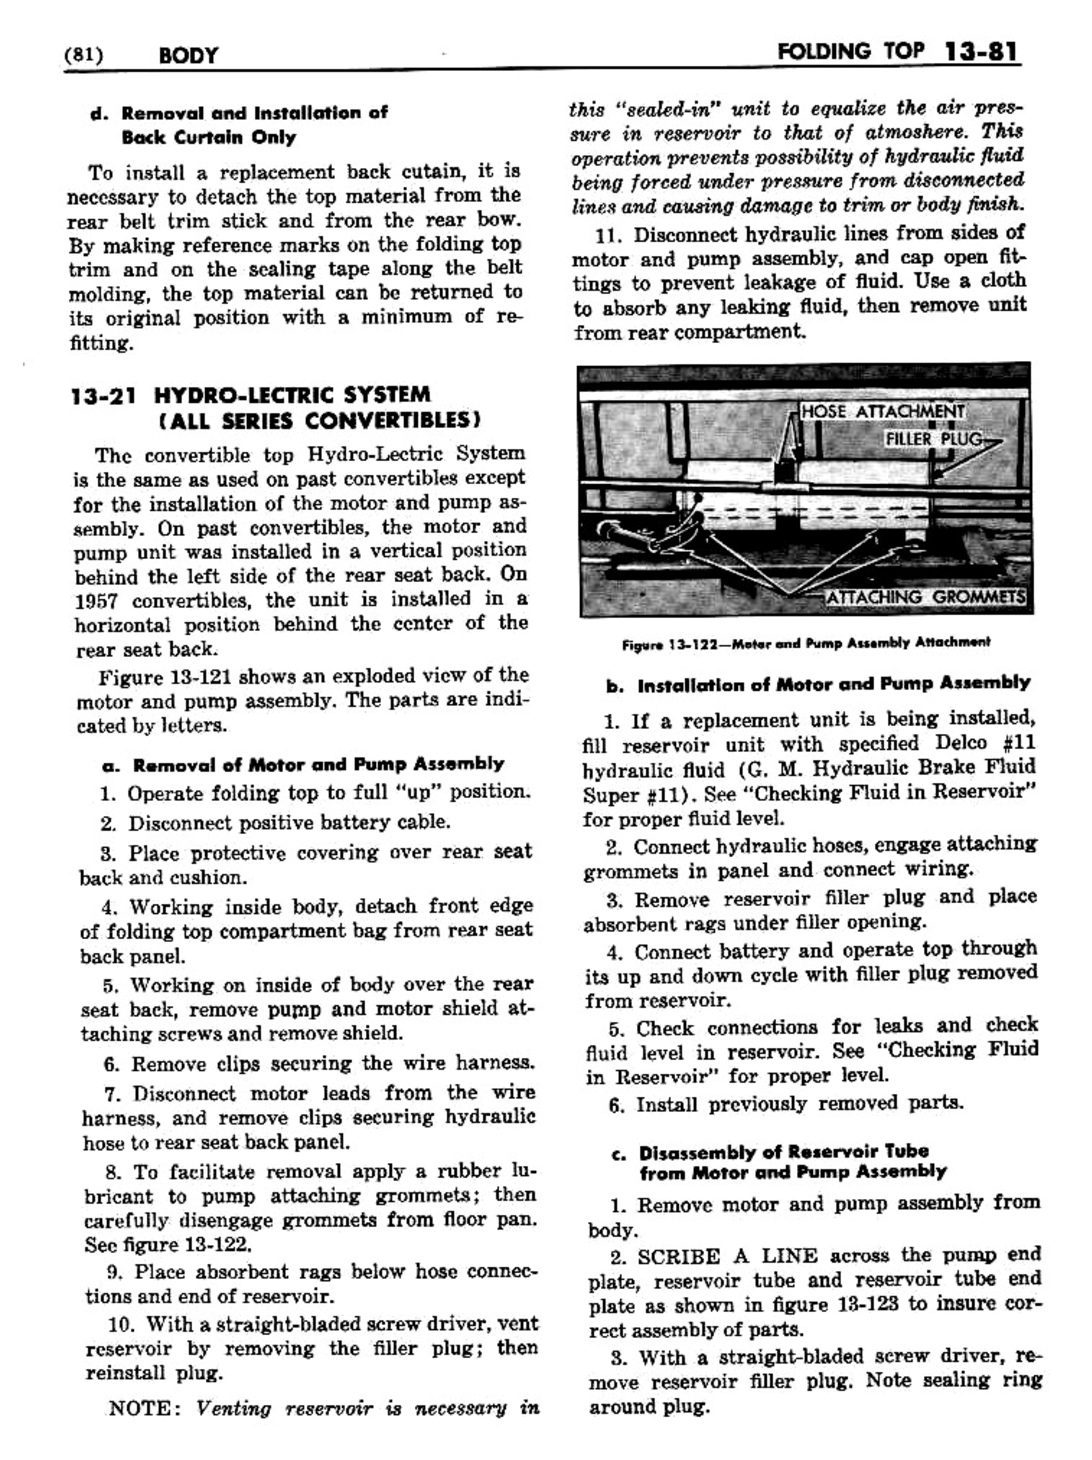 n_1957 Buick Body Service Manual-083-083.jpg